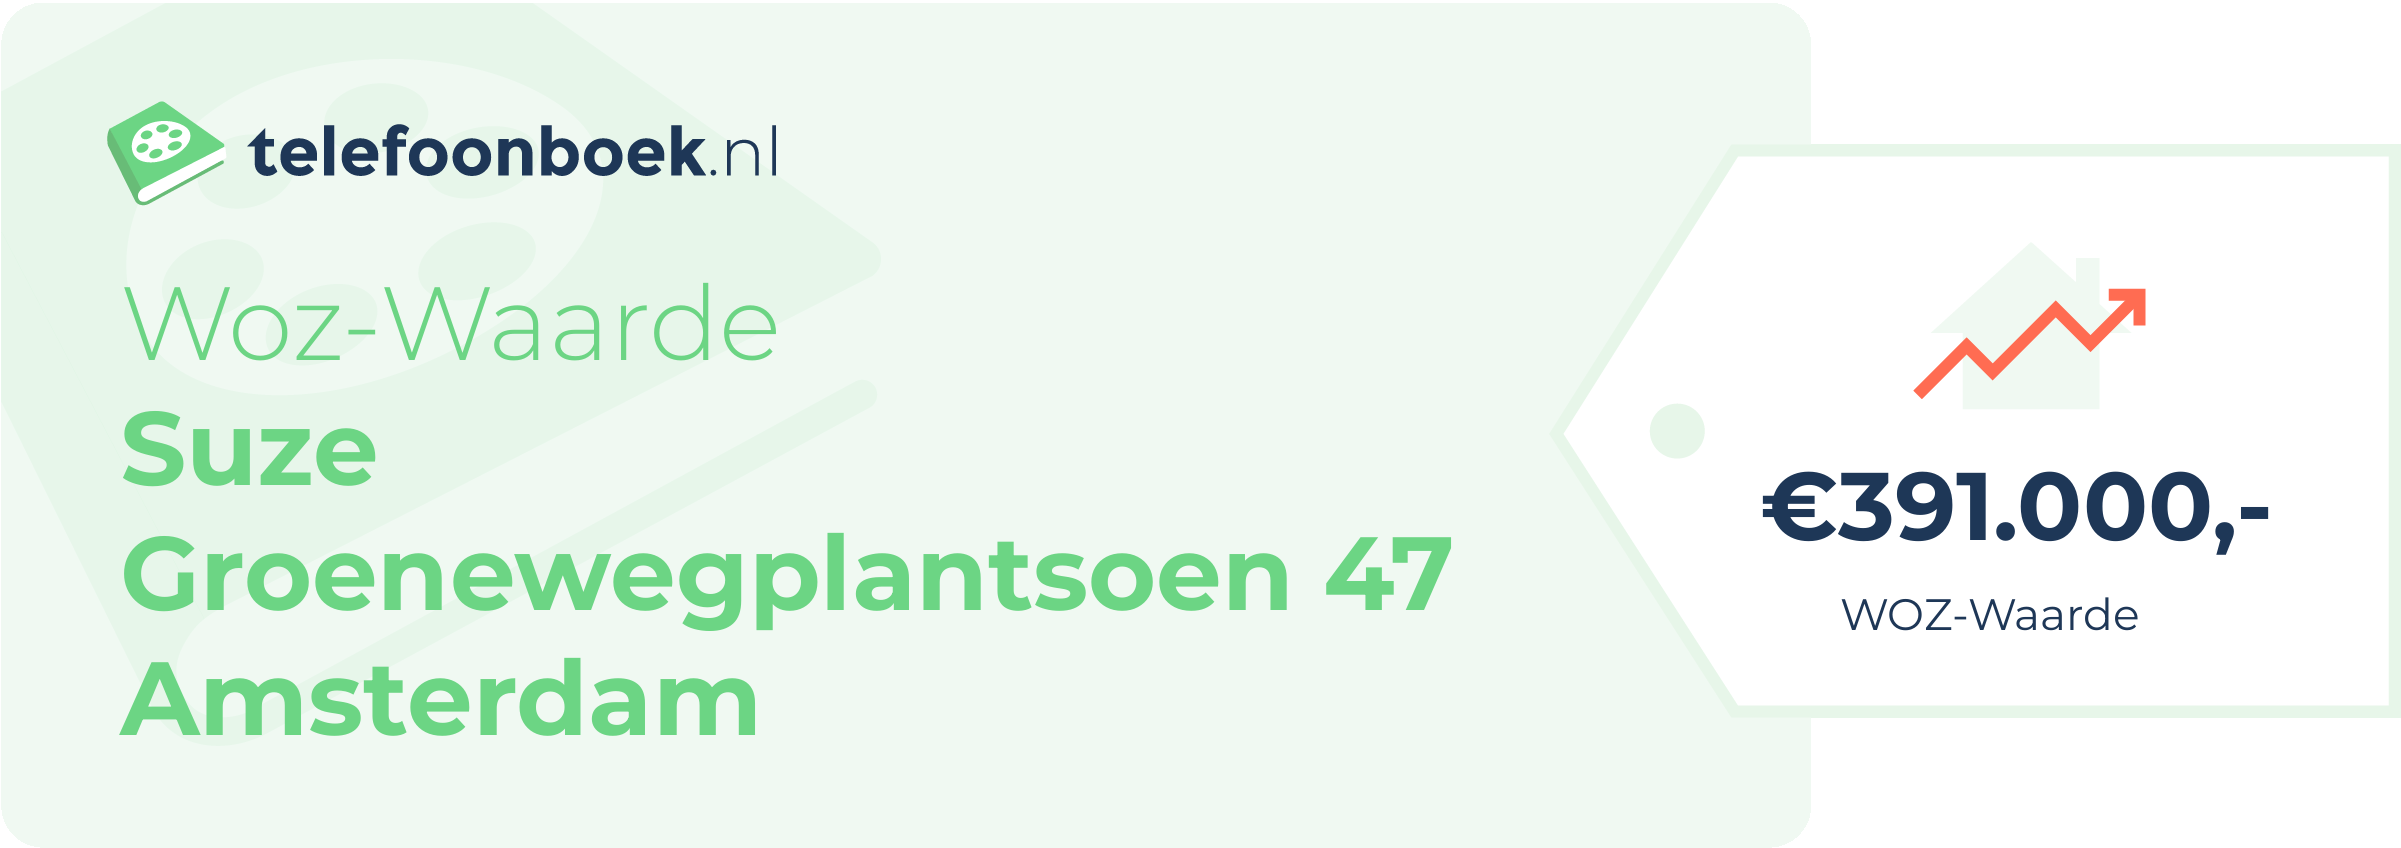 WOZ-waarde Suze Groenewegplantsoen 47 Amsterdam